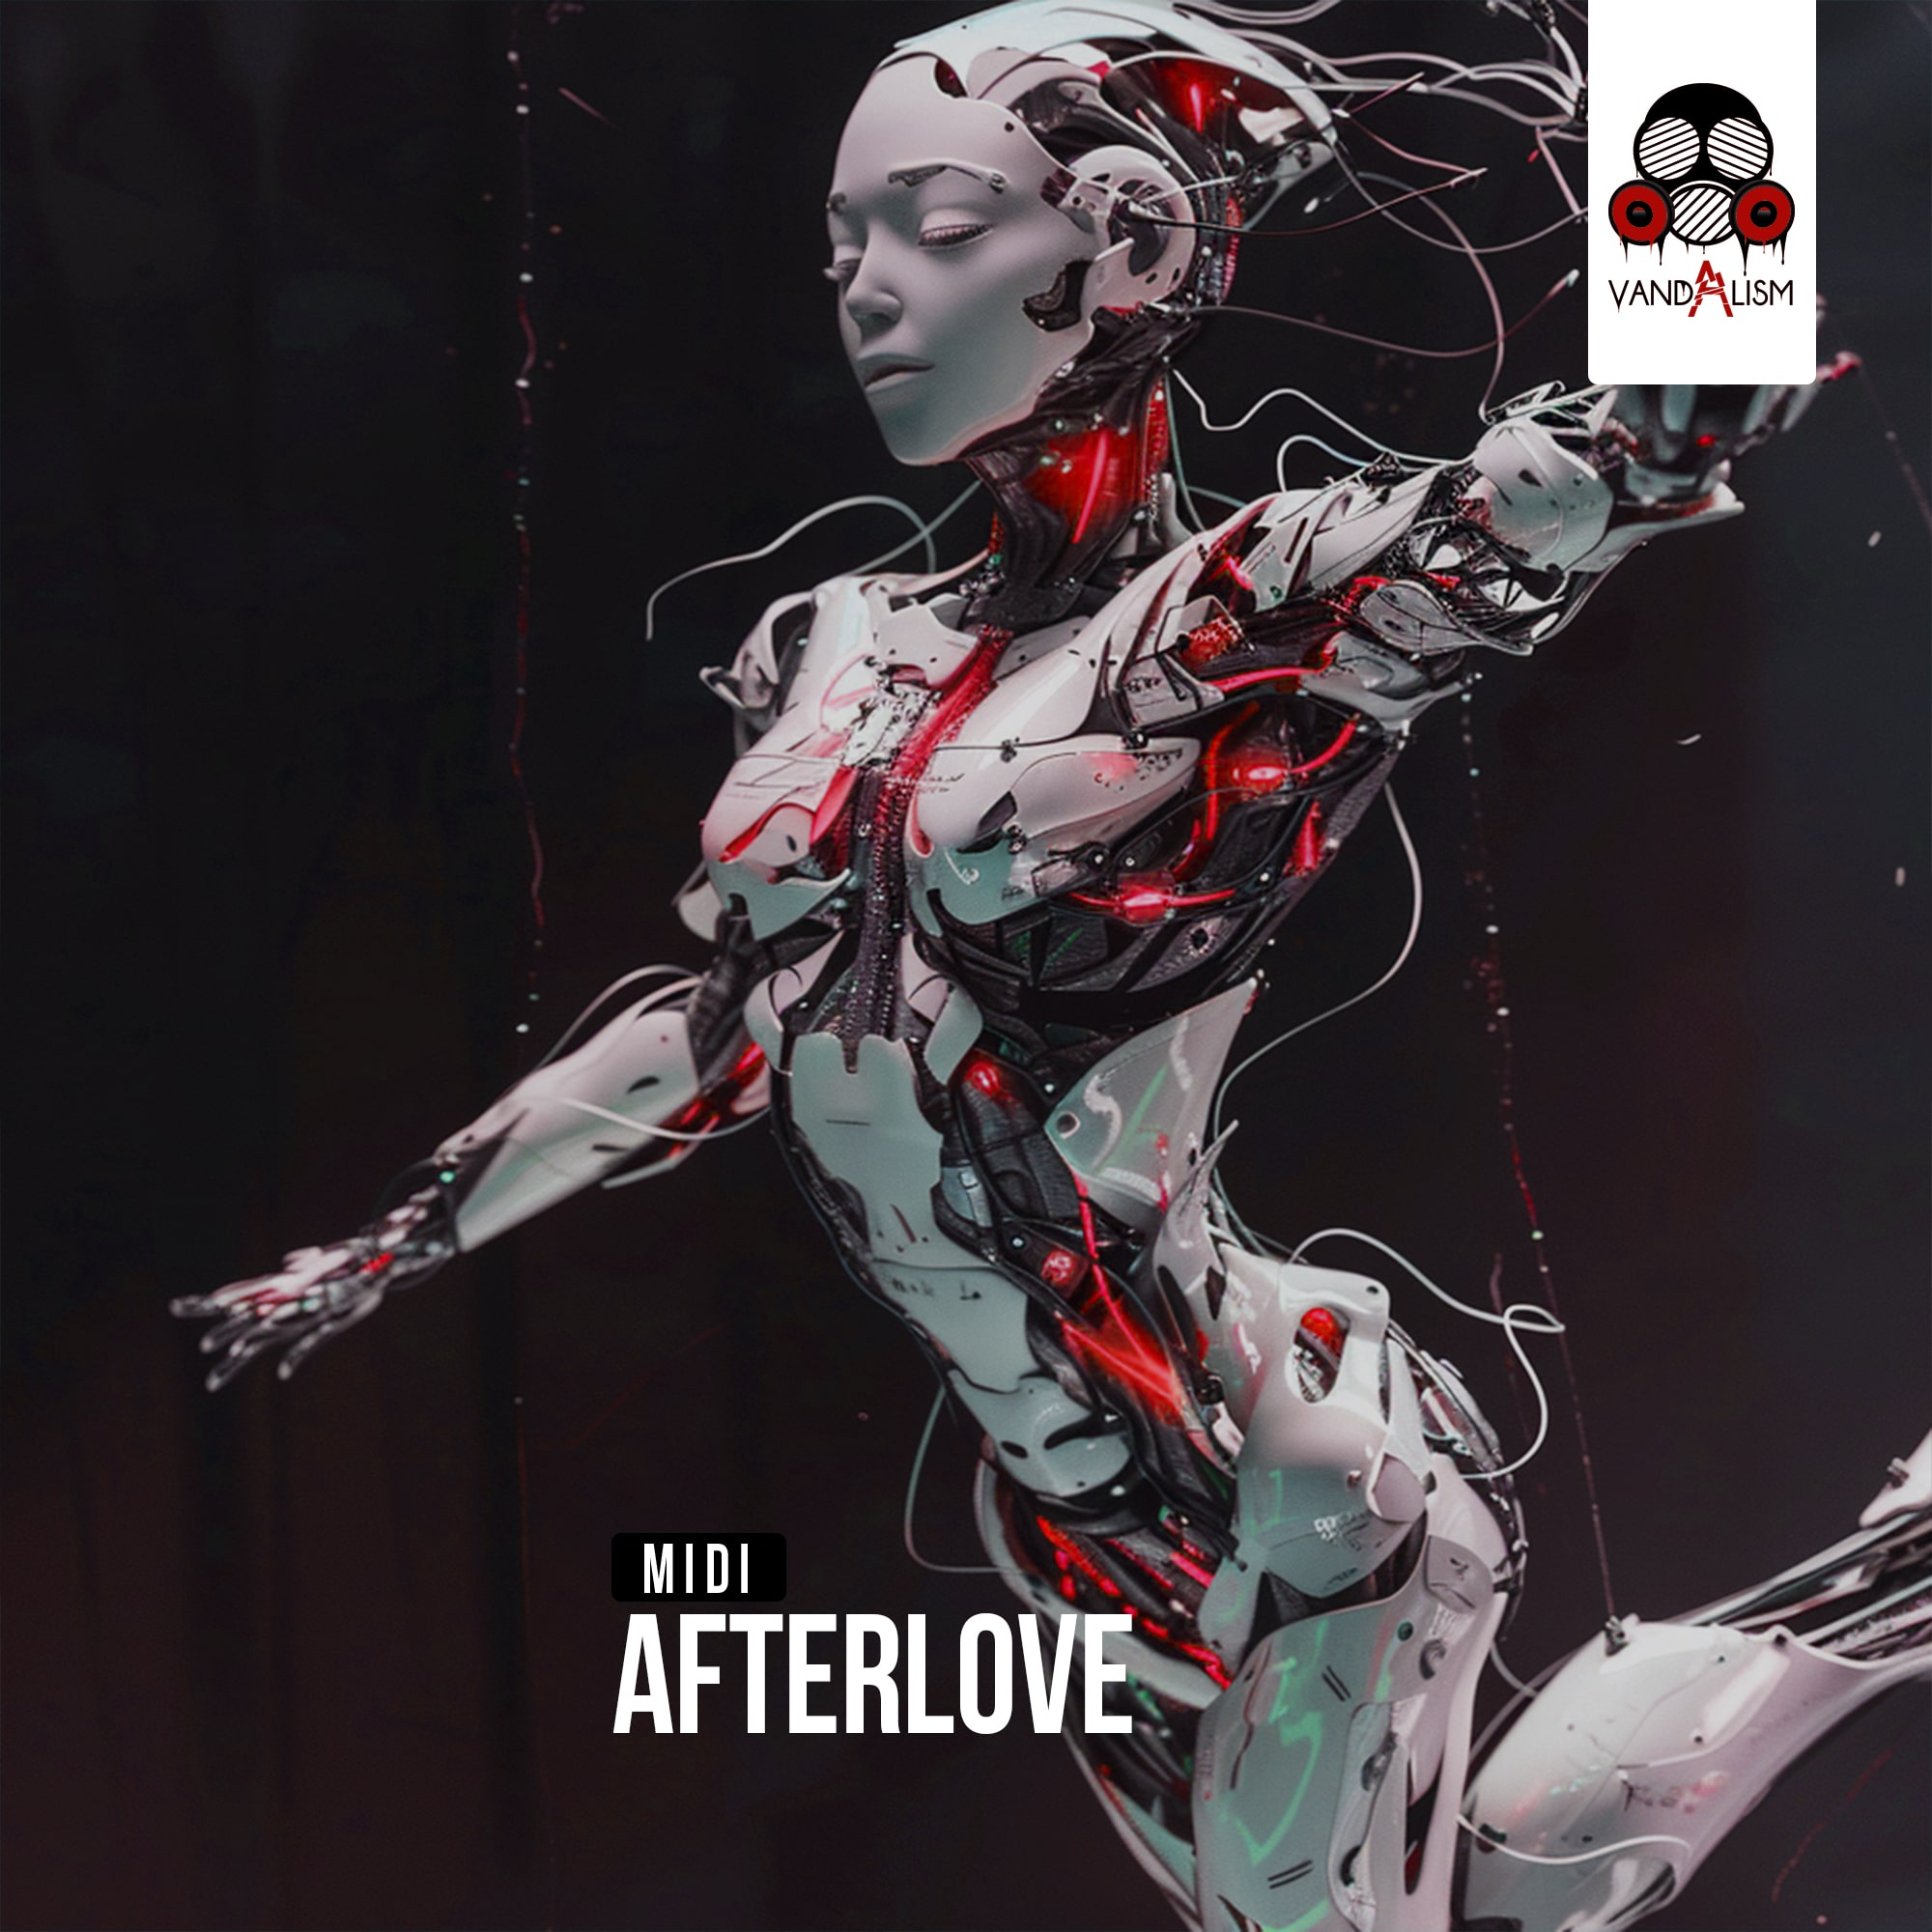 MIDI: Afterlove